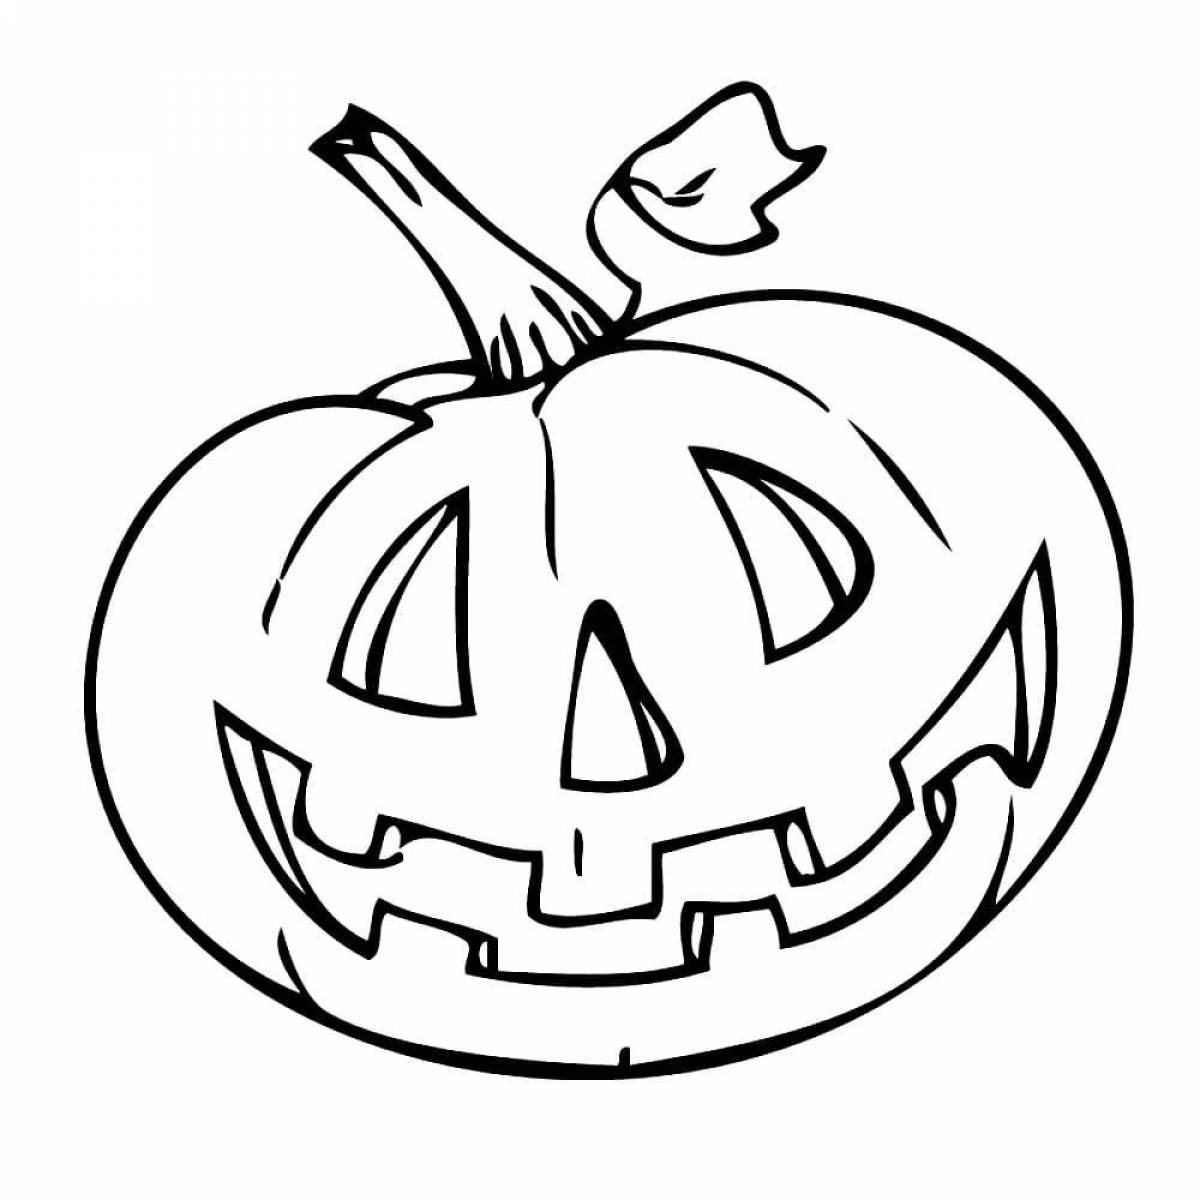 Spooky halloween coloring book